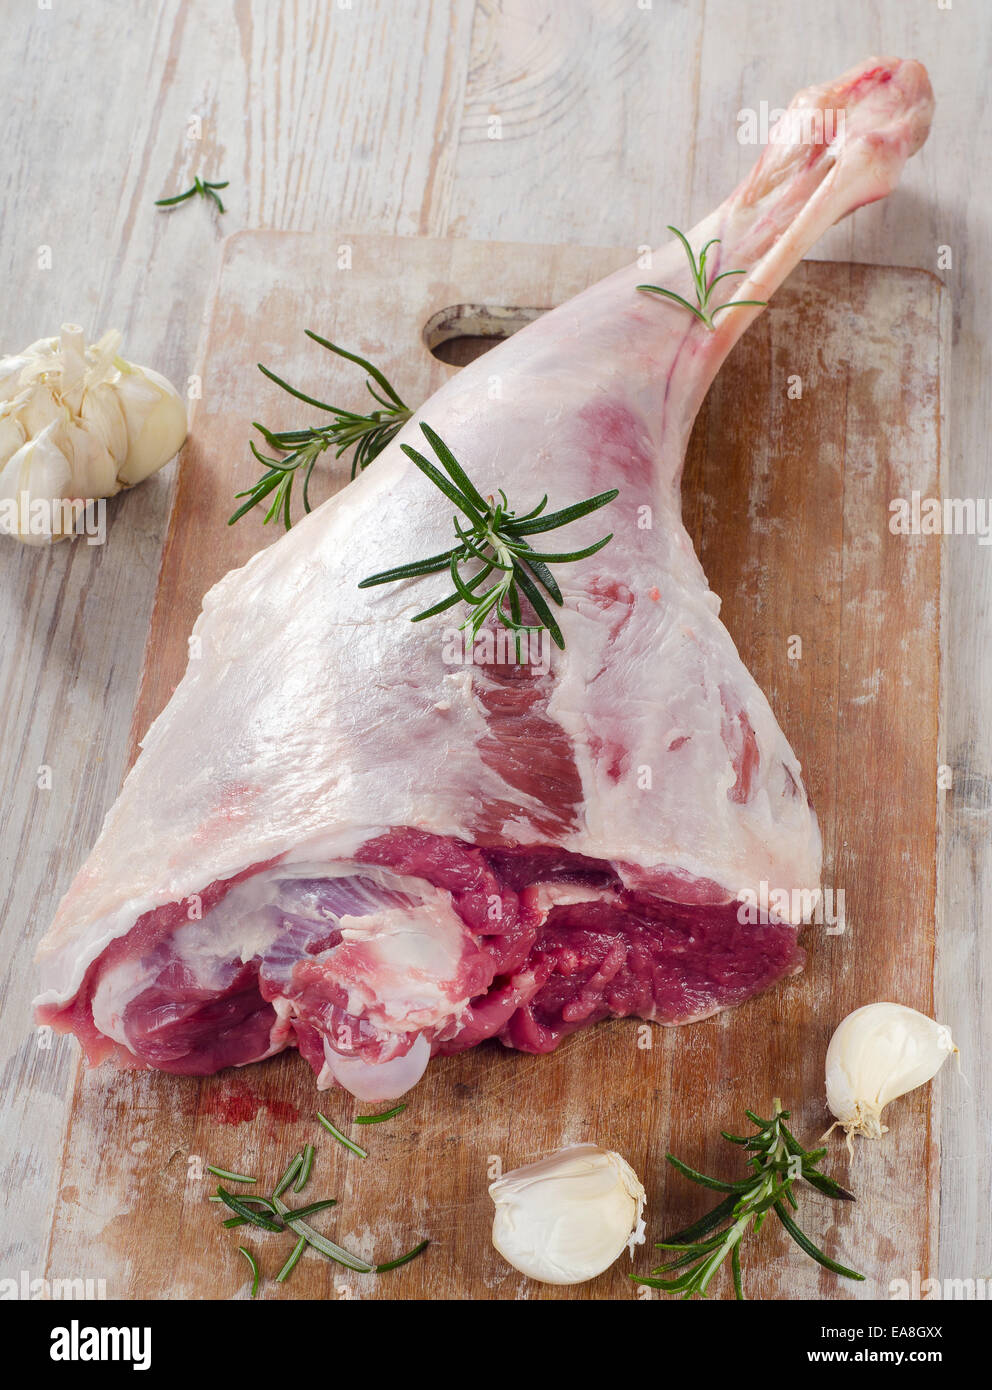 Lamb Leg Bone High Resolution Stock Photography and Images - Alamy